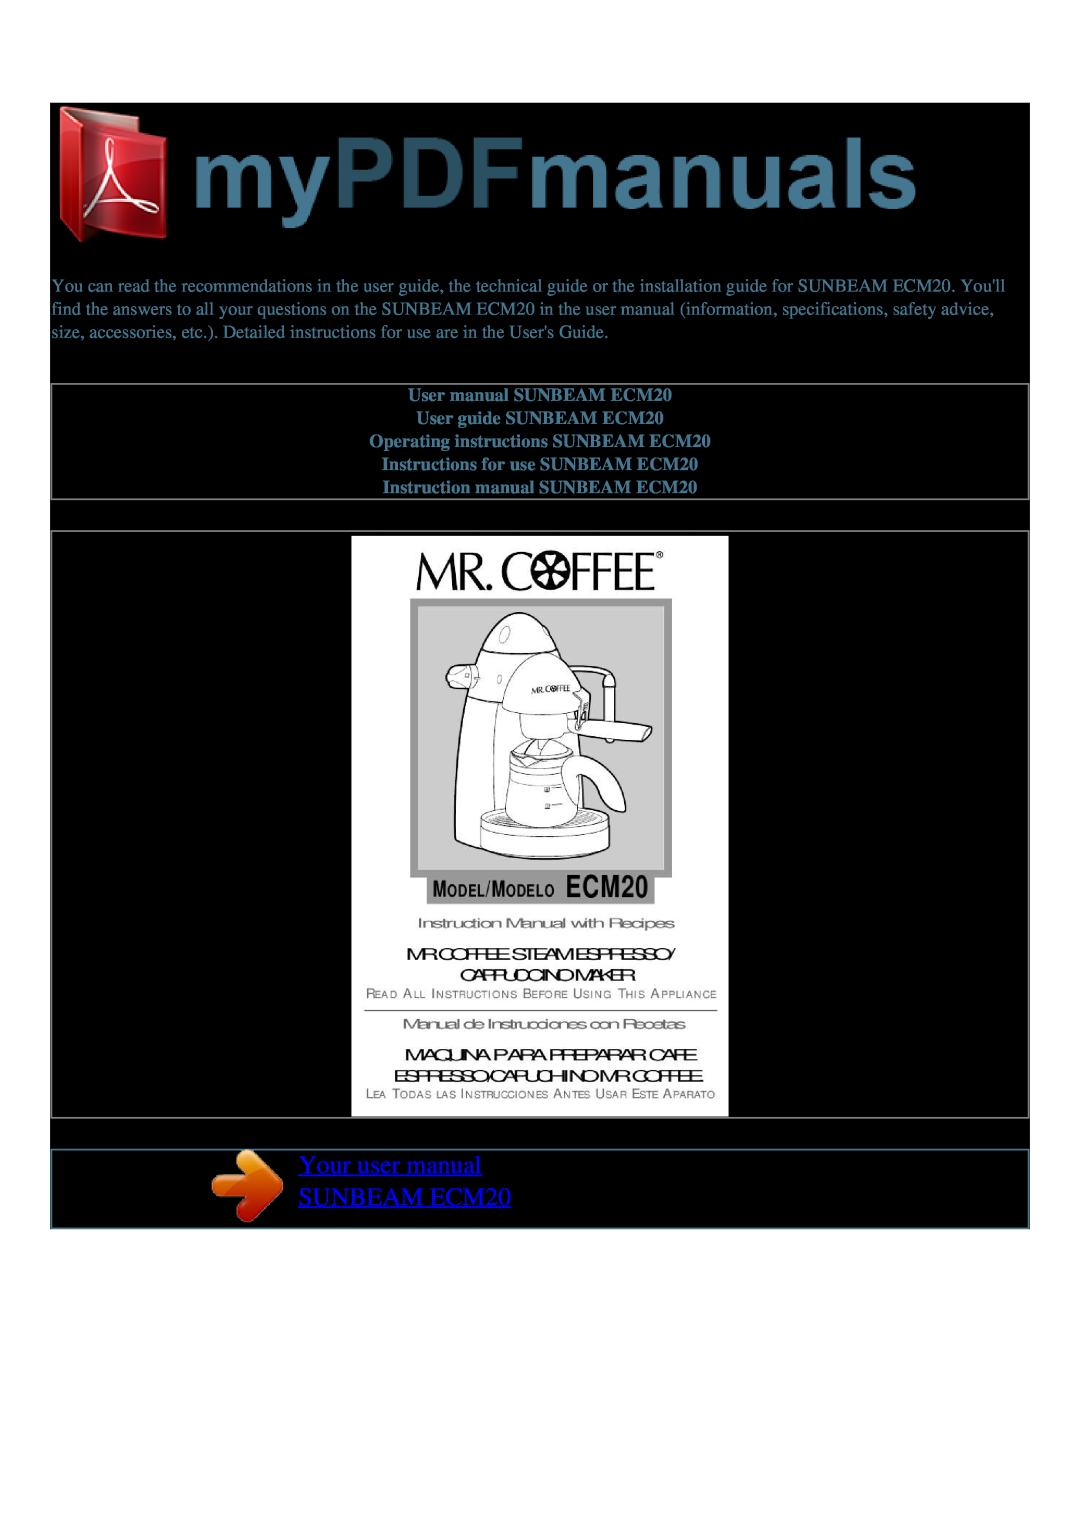 Mr. Coffee ECM20 instruction manual Mr. Coffee Steam Espresso, Cappuccinomaker, Instruction Manual with Recipes 